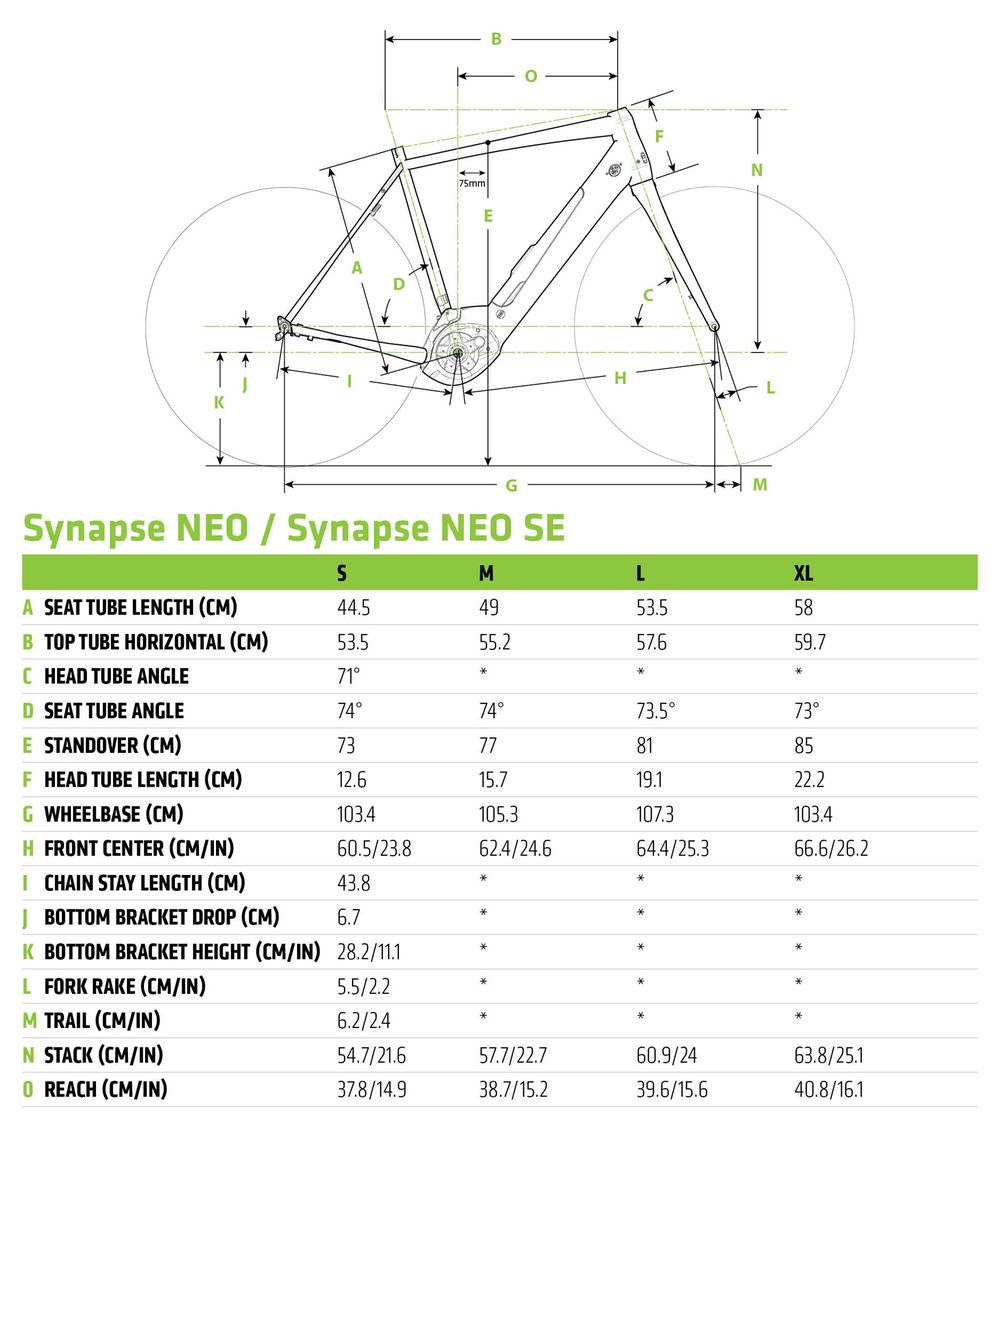 Synapse NEO 1 - 